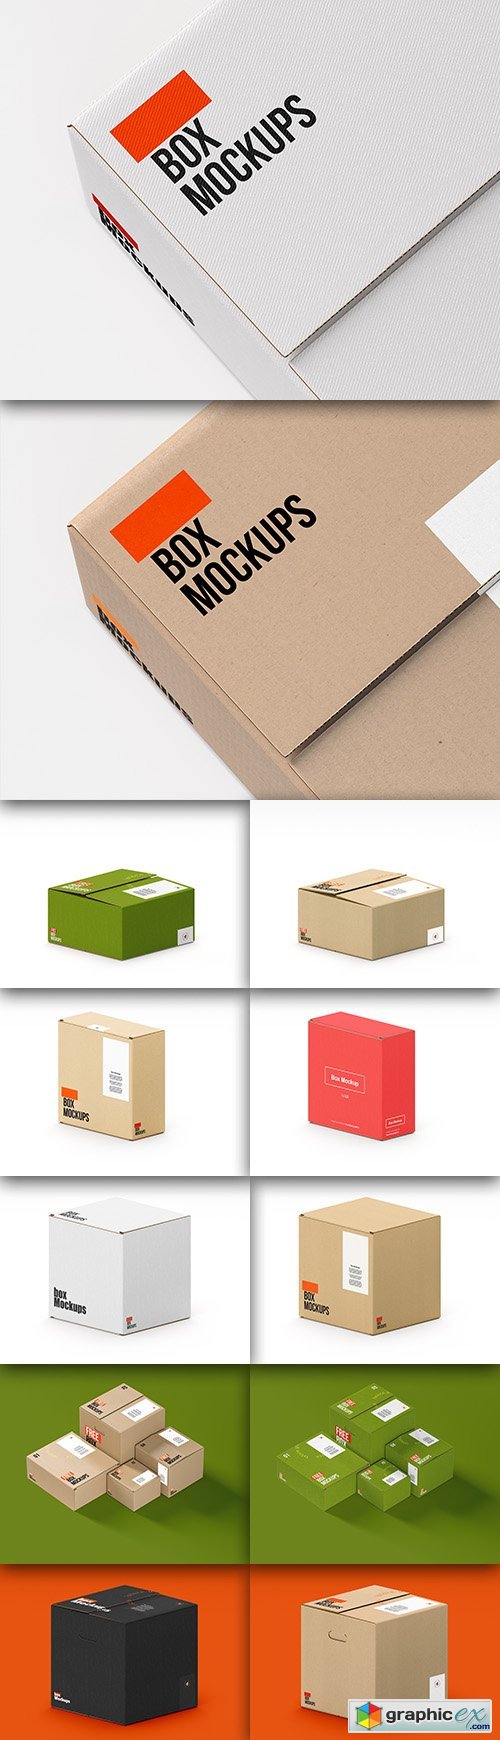 PSD Mock-Ups - 7 Box Package